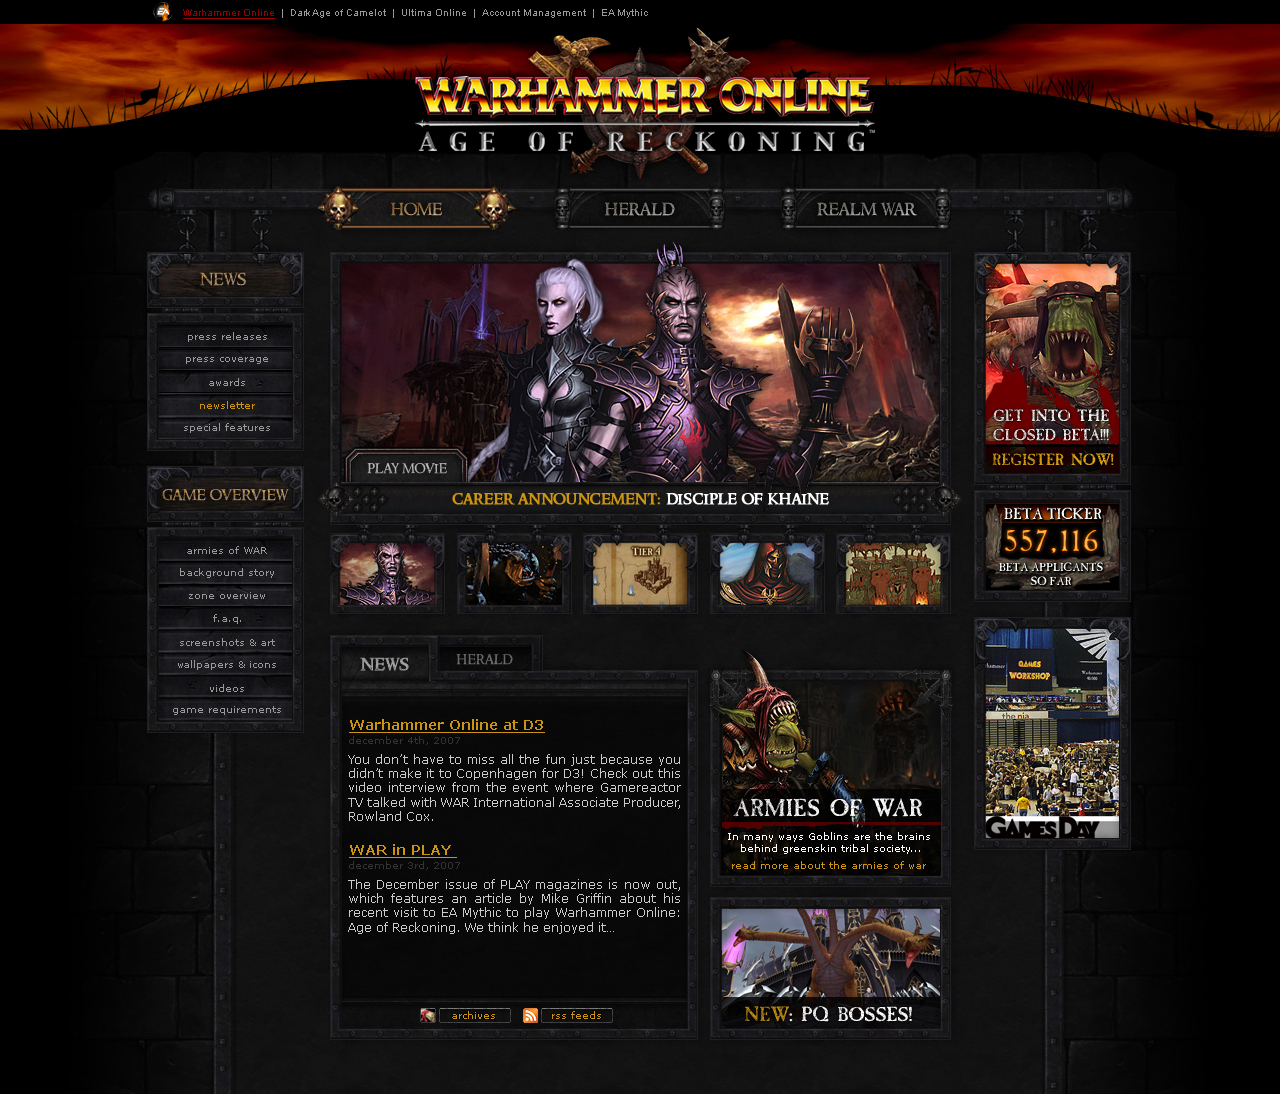 Warhammer Online - Launch Site - Home